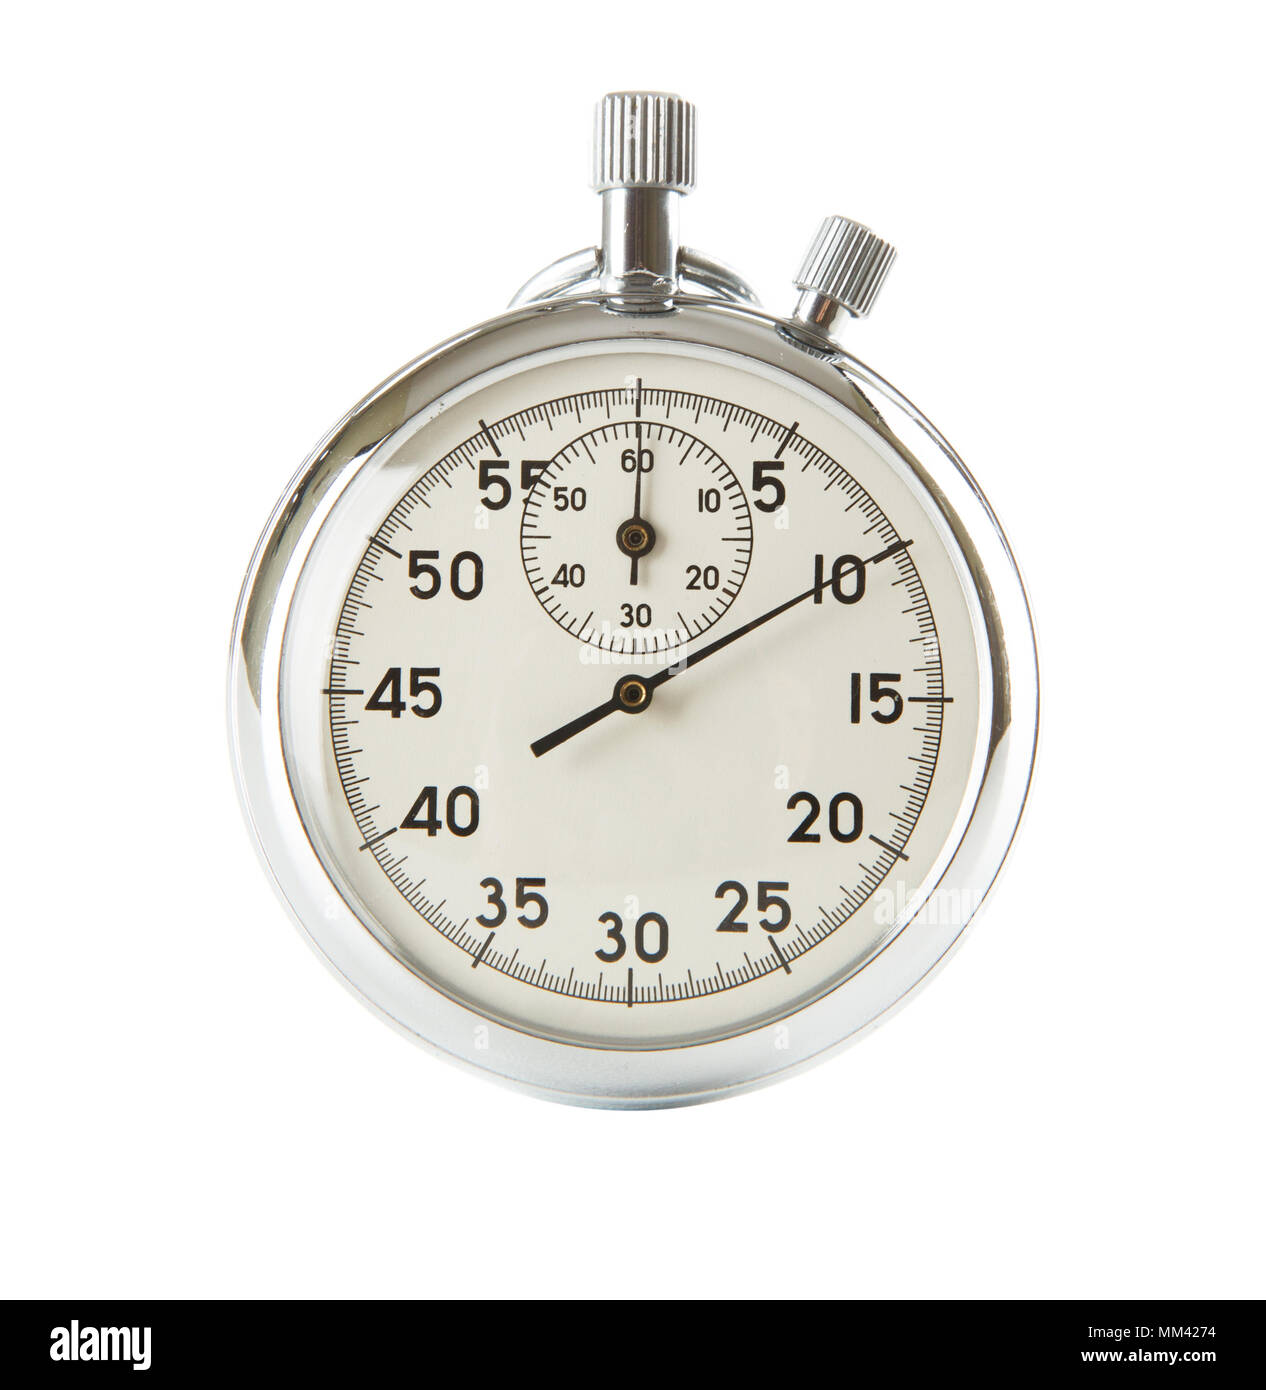 Cronometro analogico su sfondo bianco Foto Stock